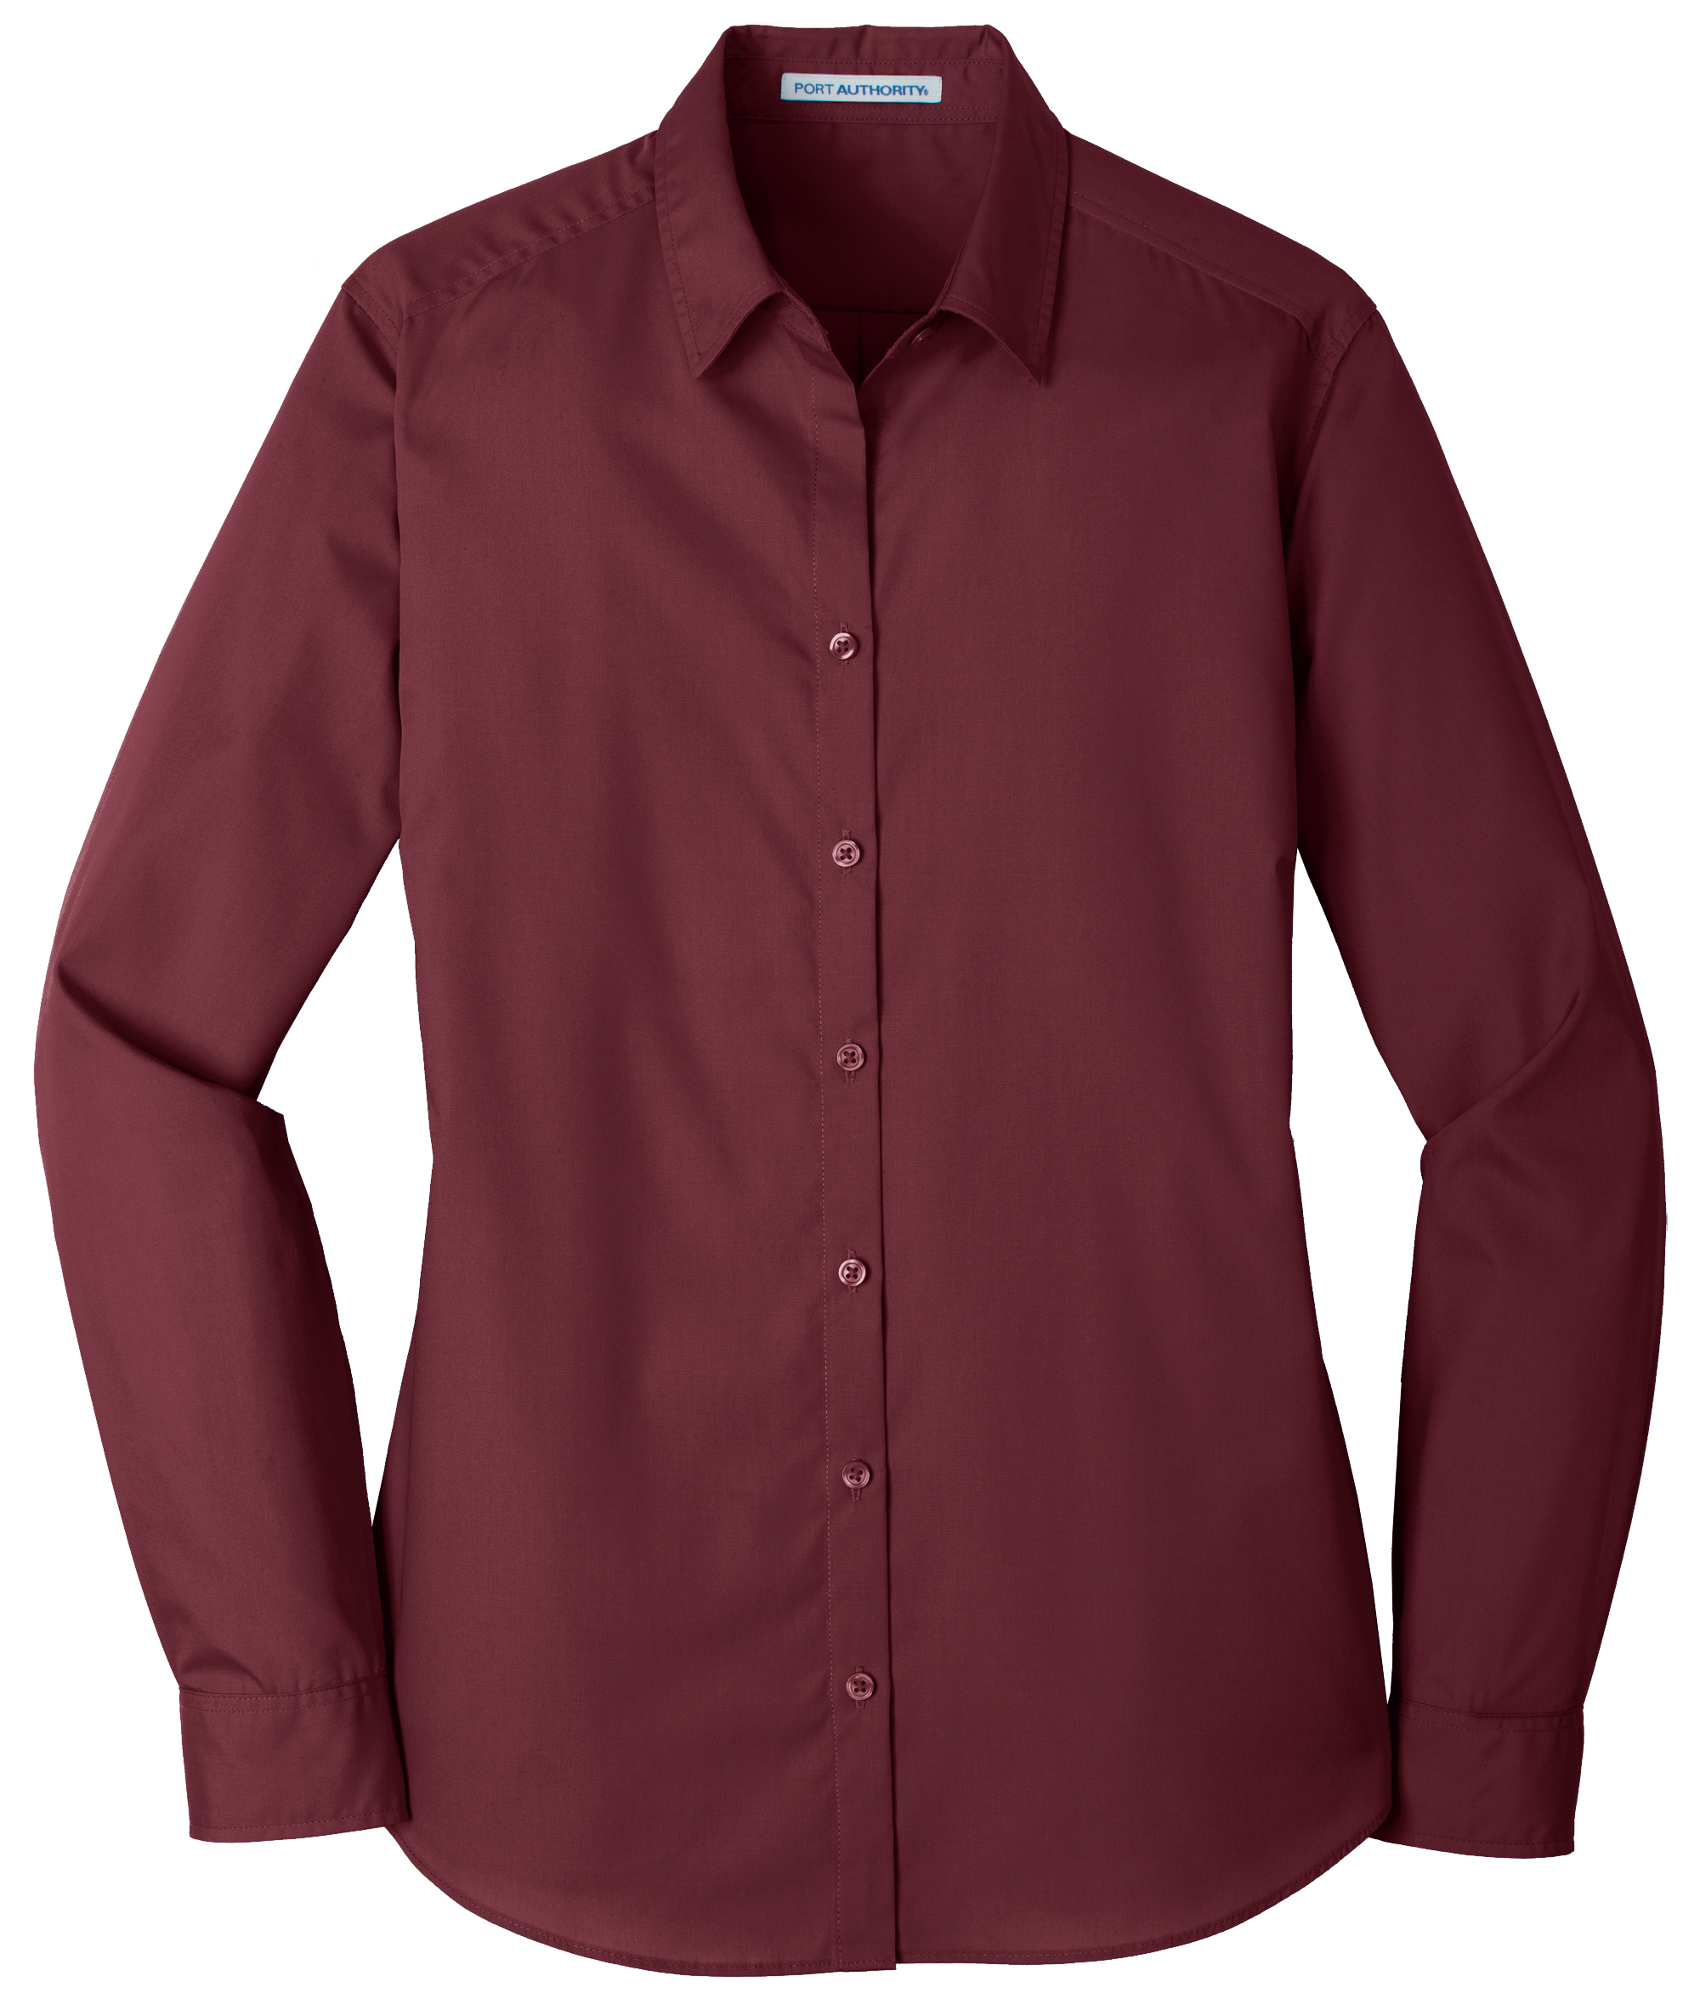 Mafoose Women Cotton/Polyester Female Shirt Burgundy XS - image 5 of 6